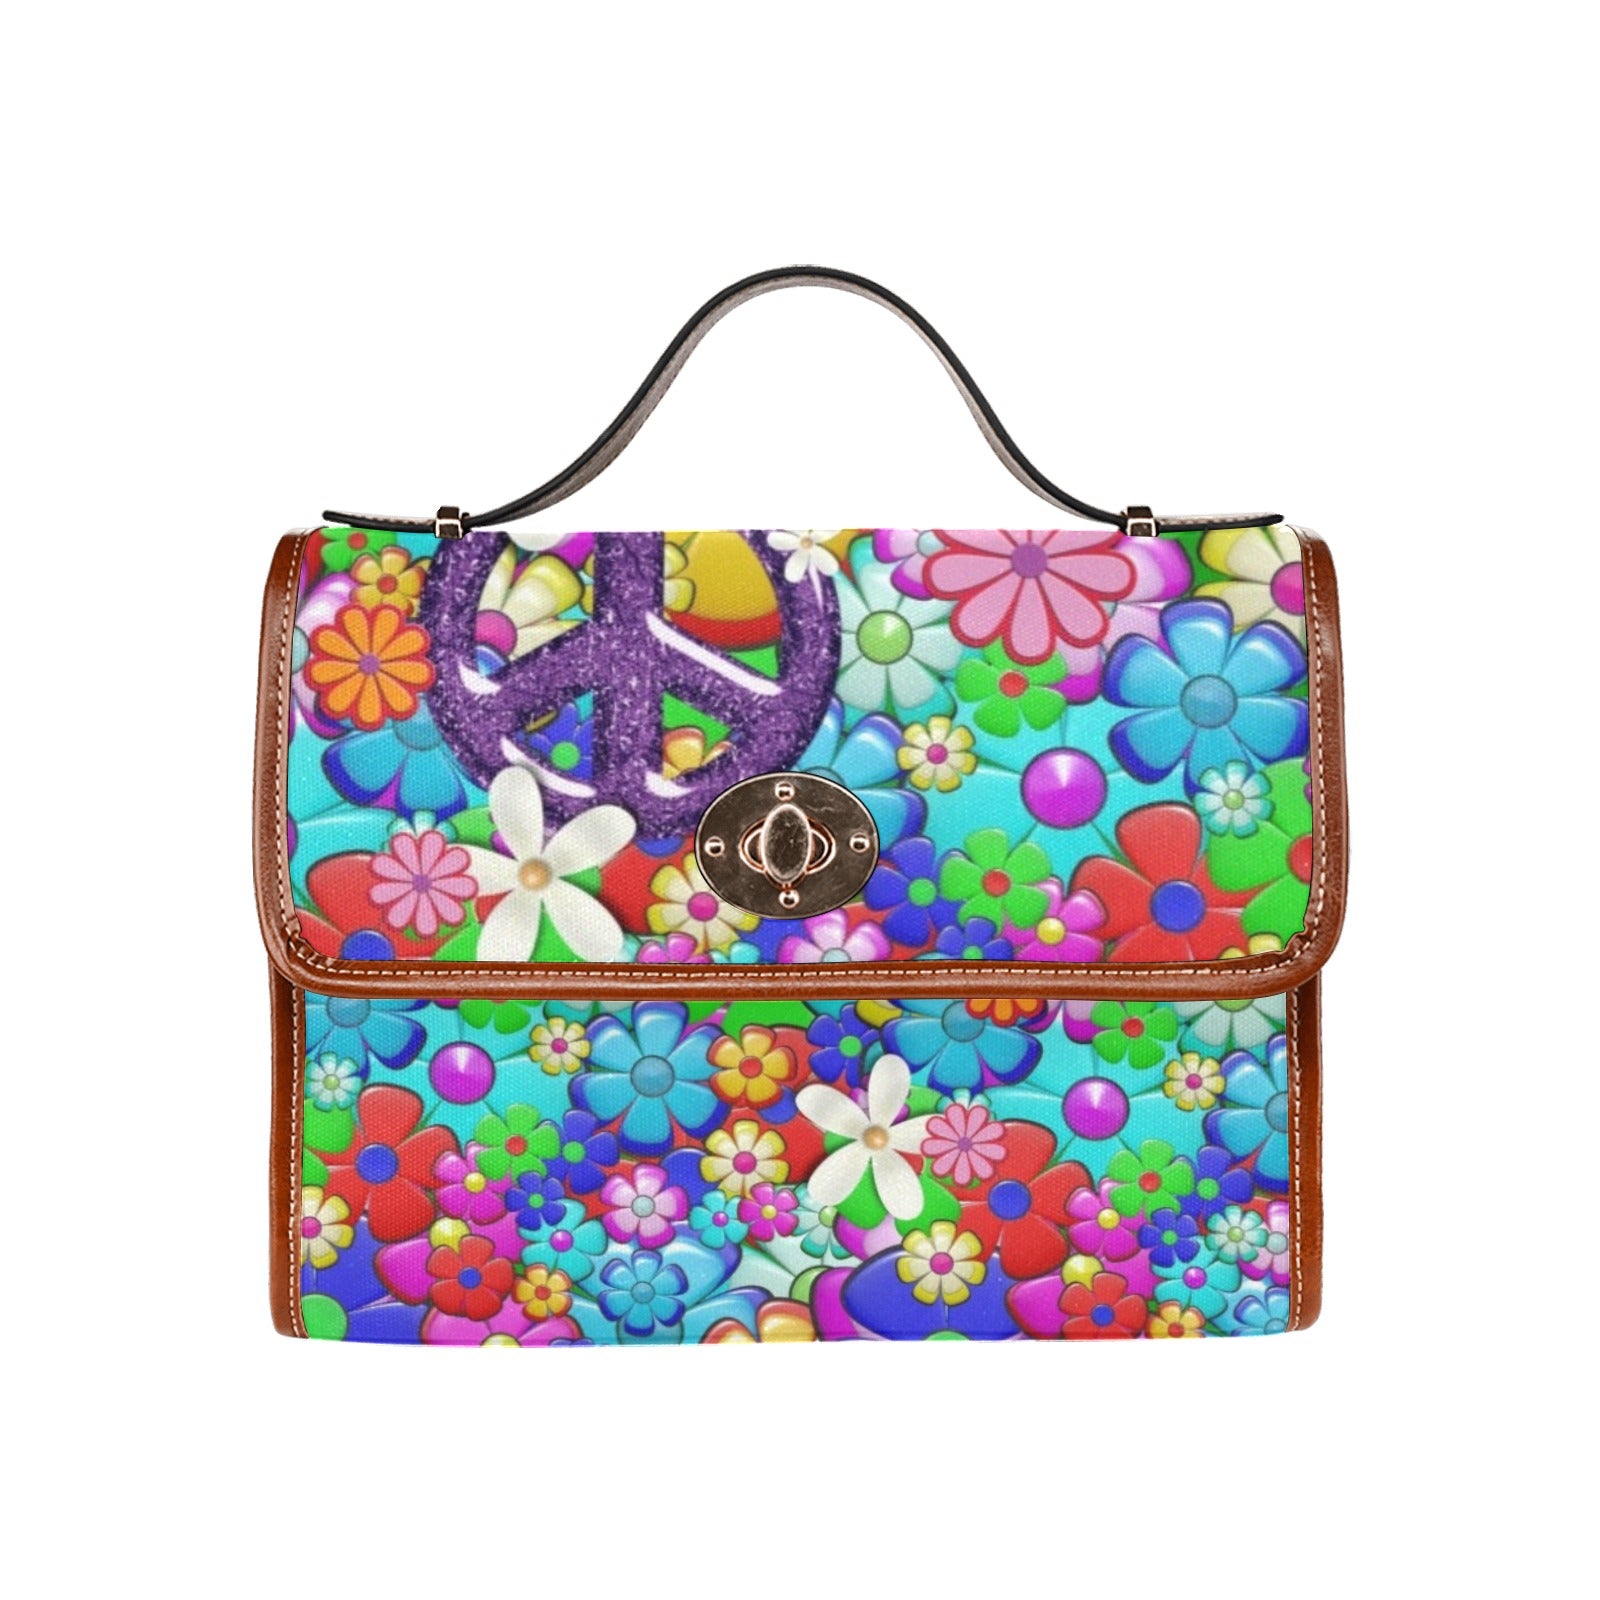 Flower Power - Waterproof Canvas Handbag - Little Goody New Shoes Australia